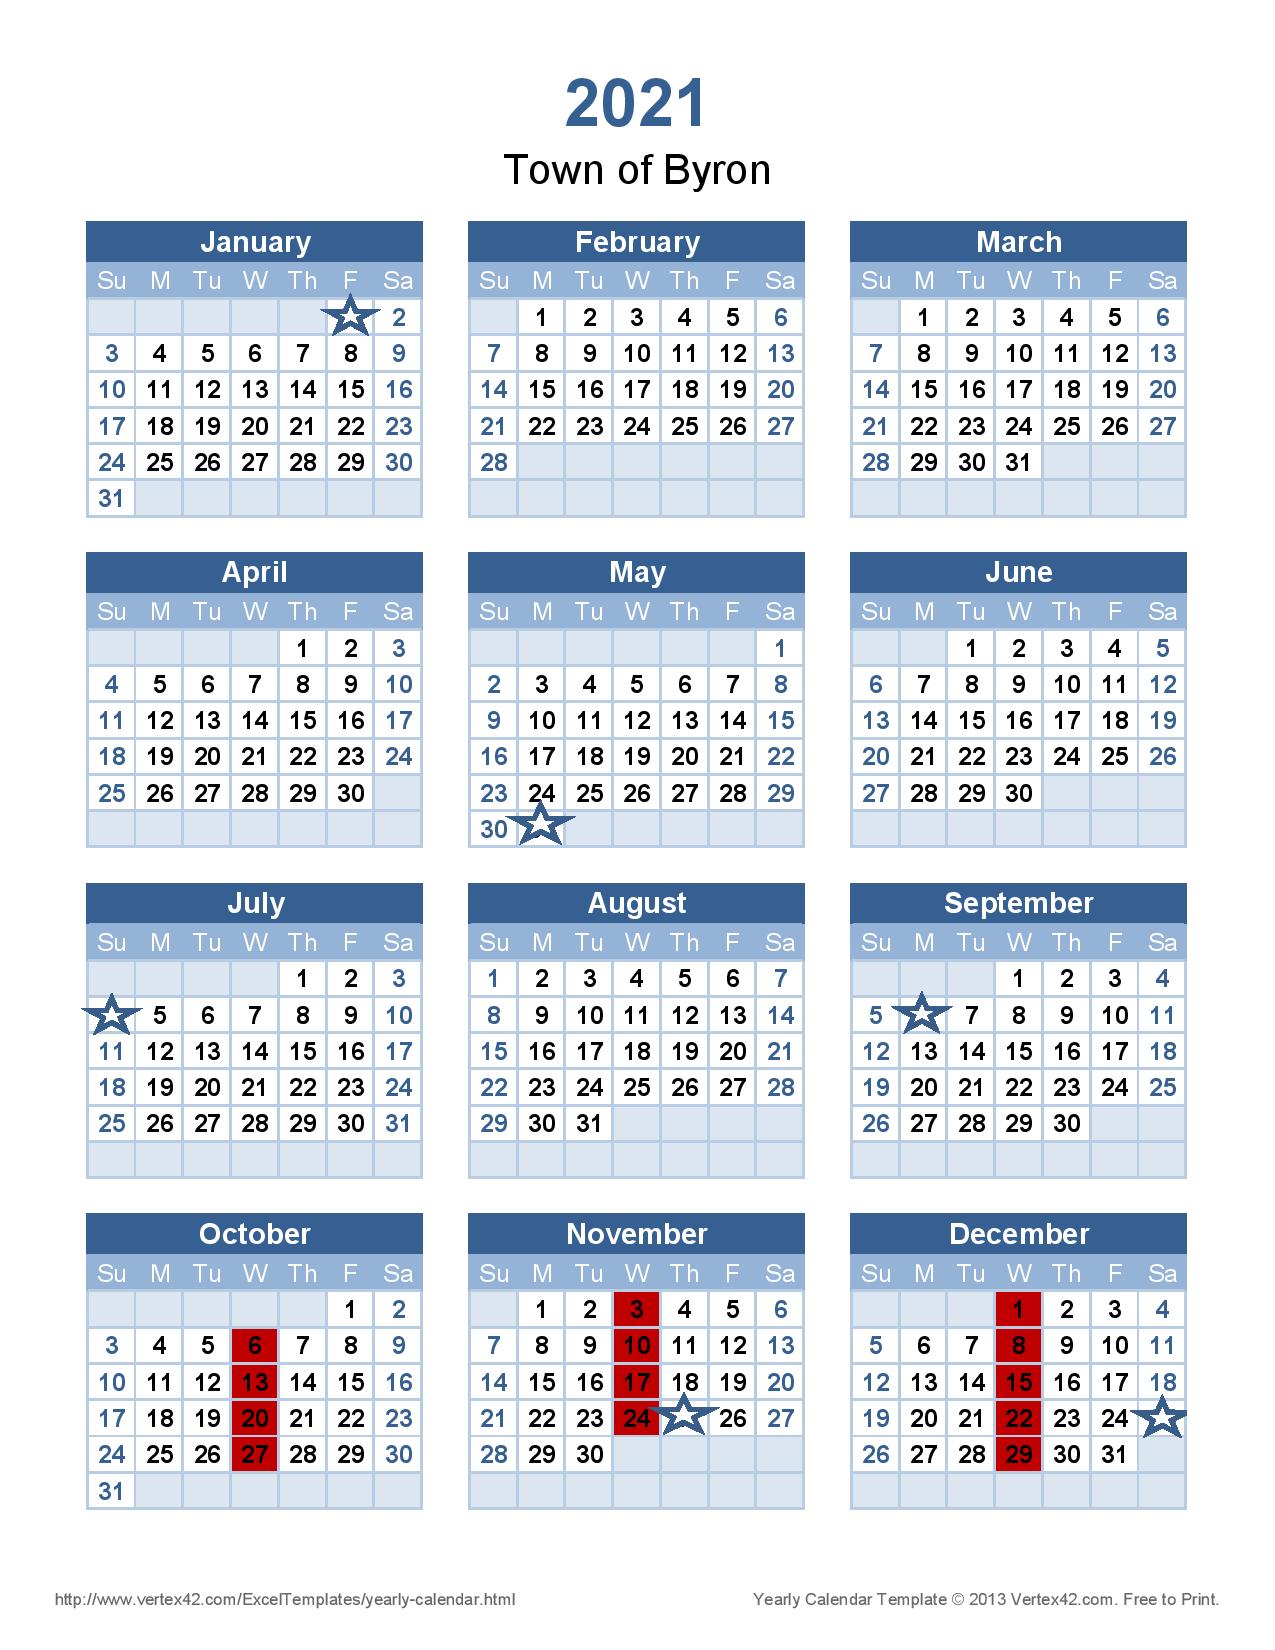 2021-Town-of-Byron-Calendar.jpg